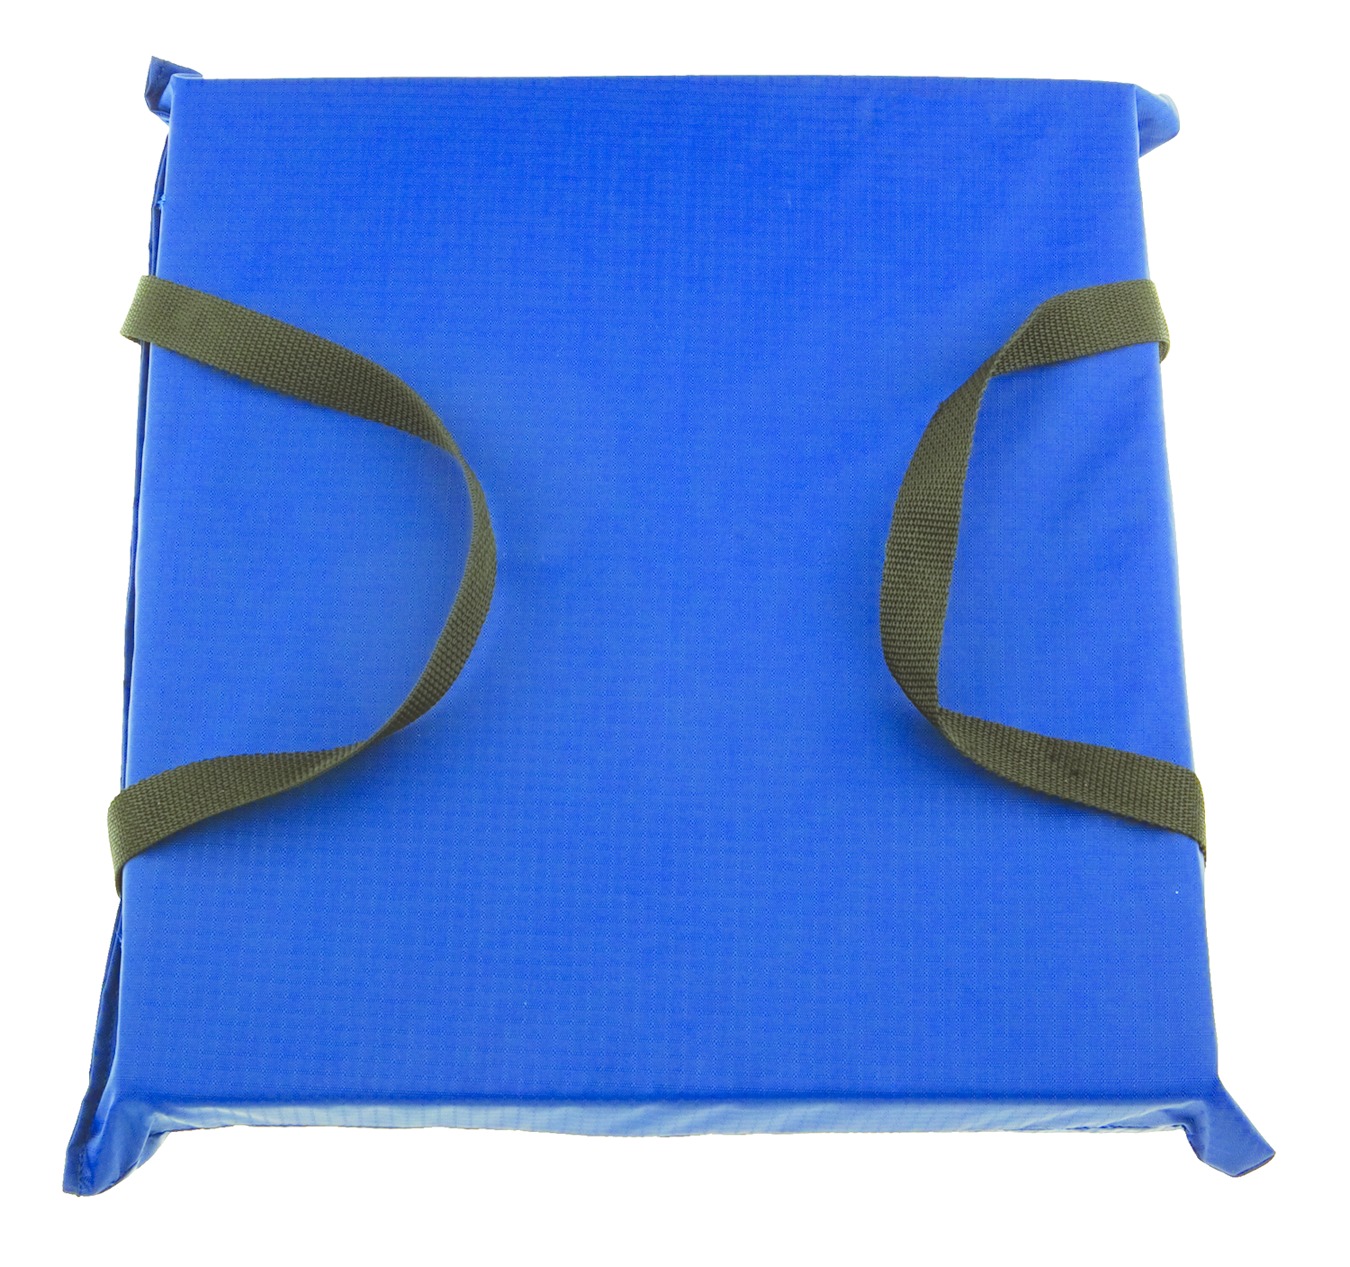 Onyx 110100-500-999-1 2 Blue Boat Cushion Comfort Series